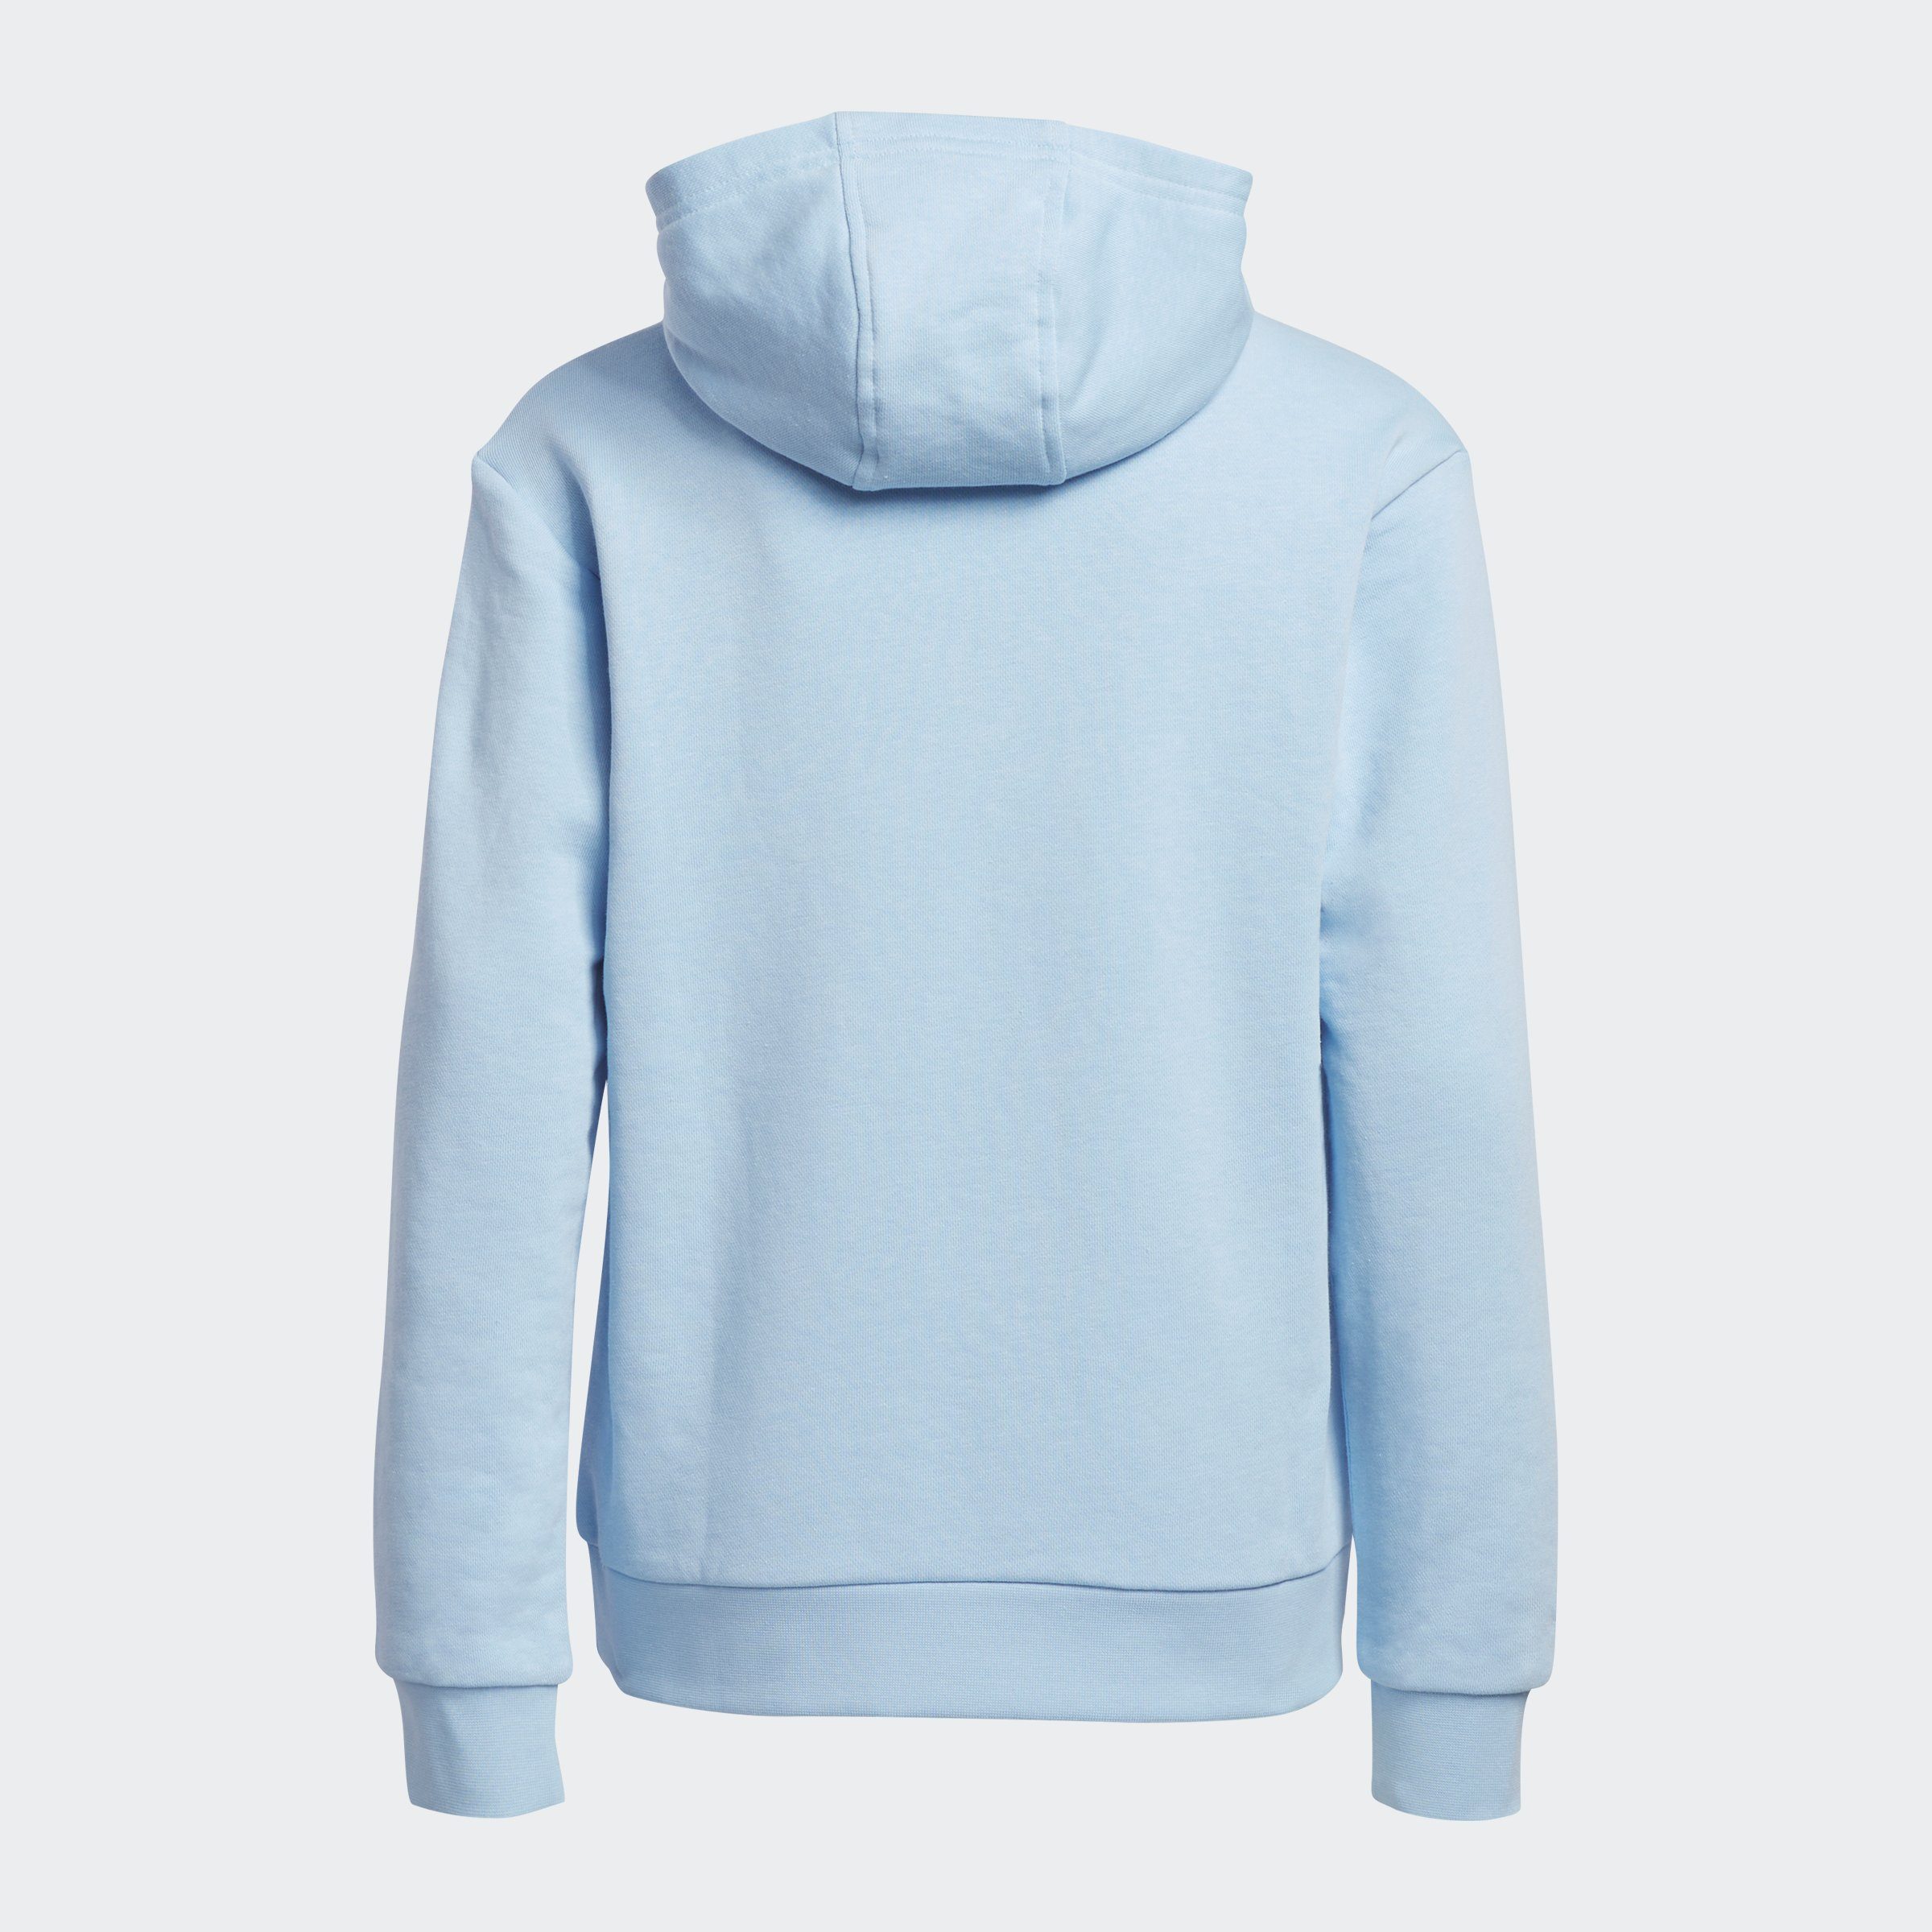 Sky Clear TREFOIL Sweatshirt White HOODIE adidas / Originals